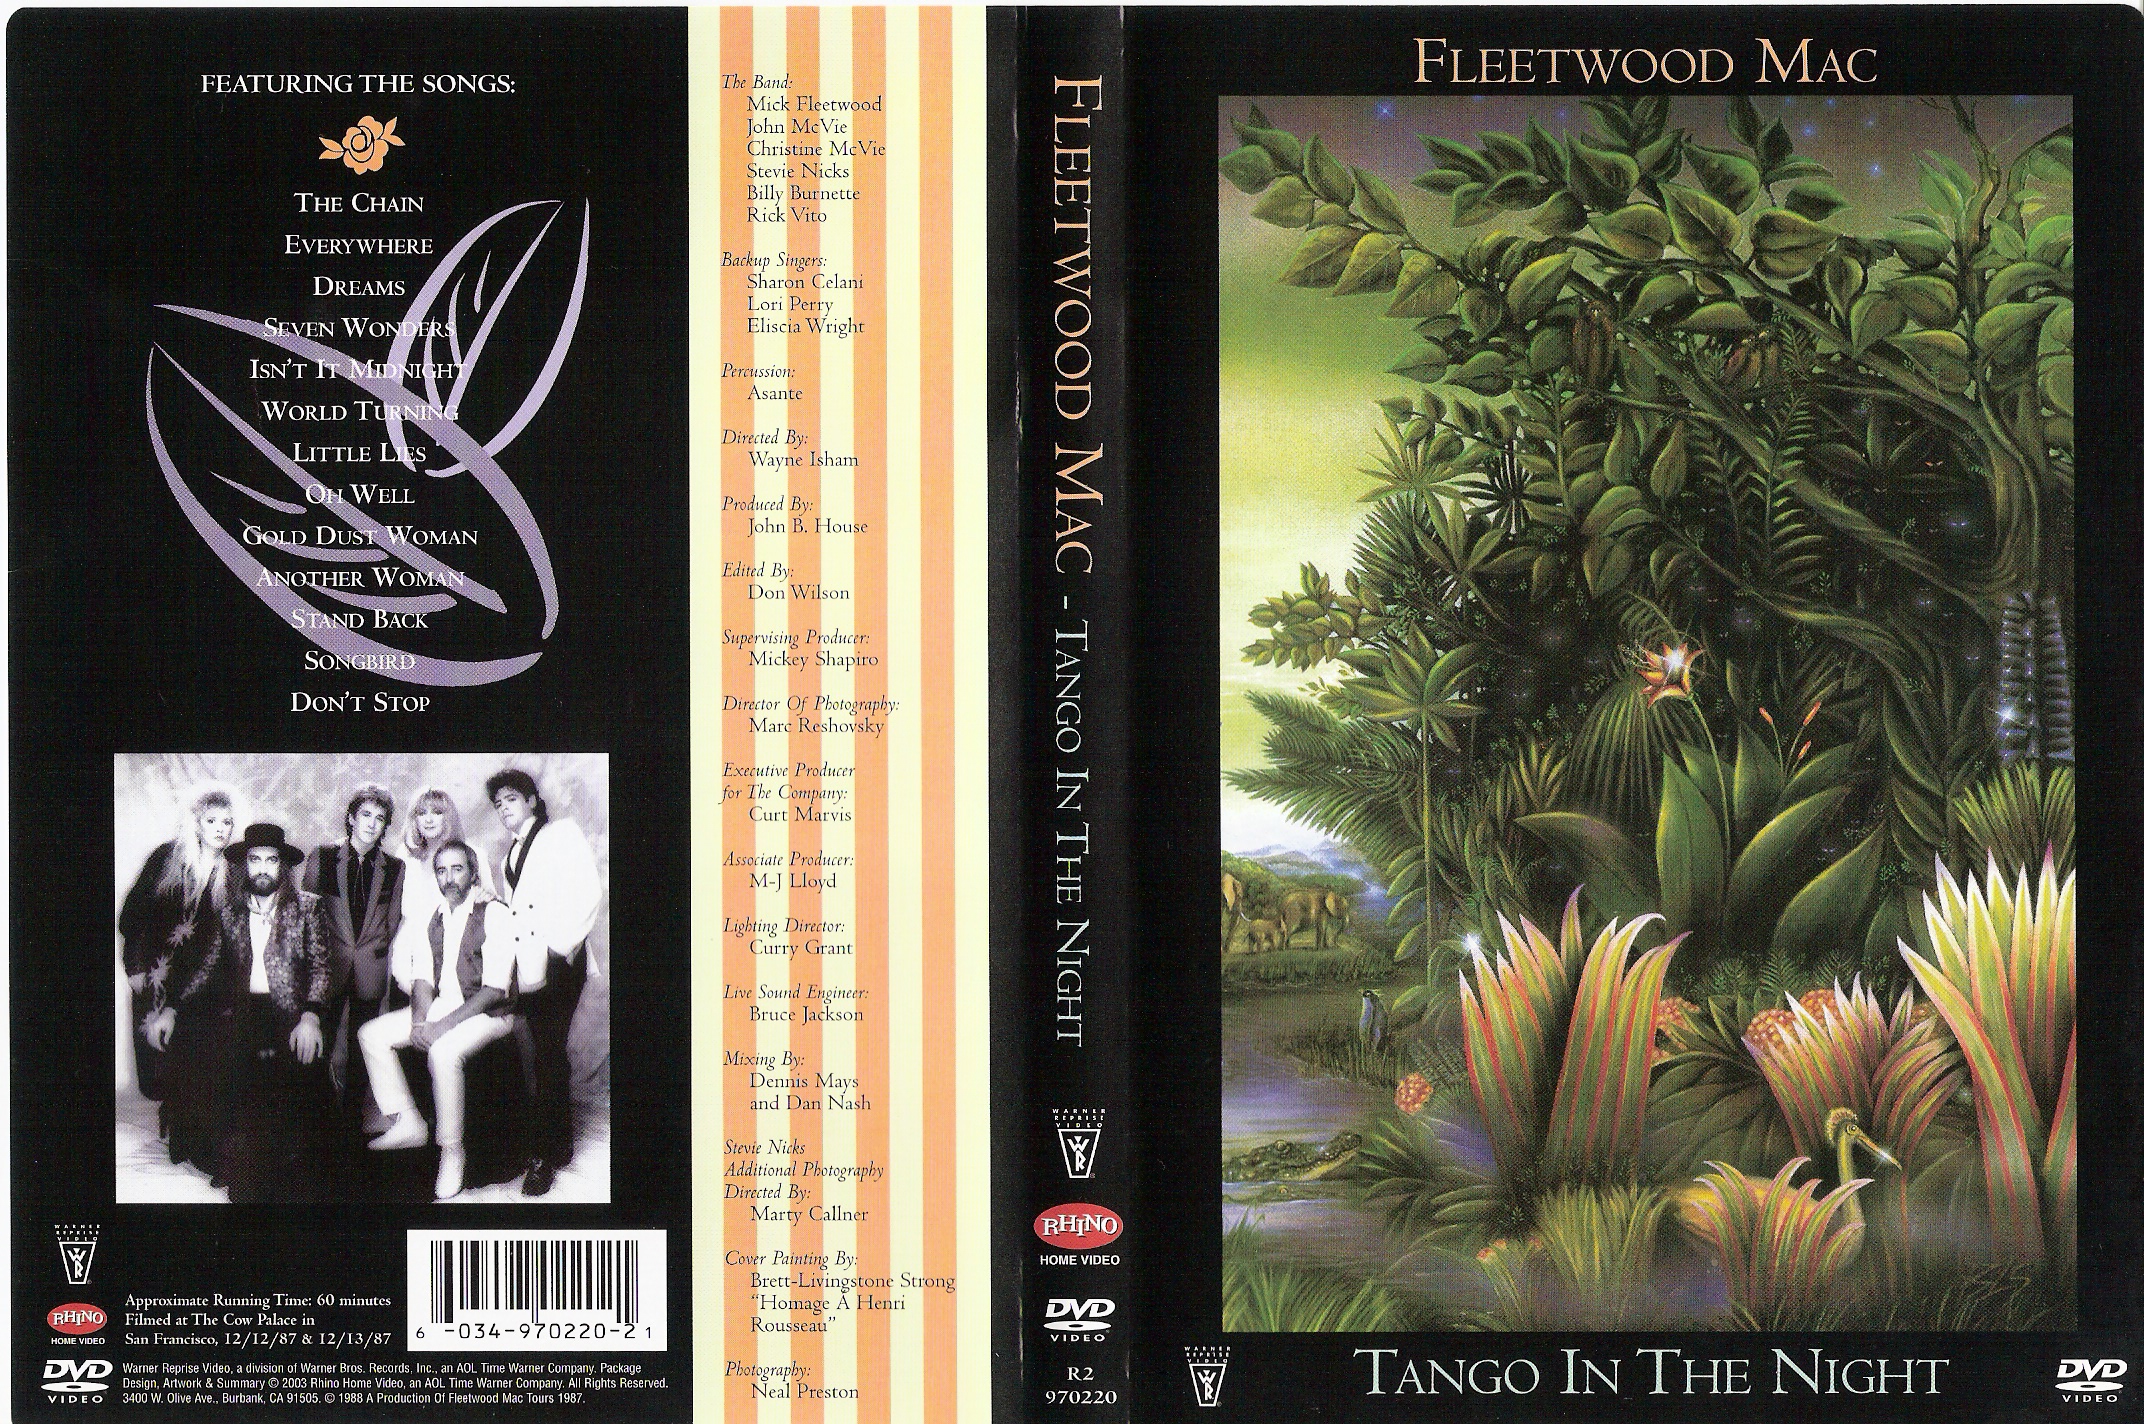 Jaquette DVD Fleetwood Mac - Tango in the night